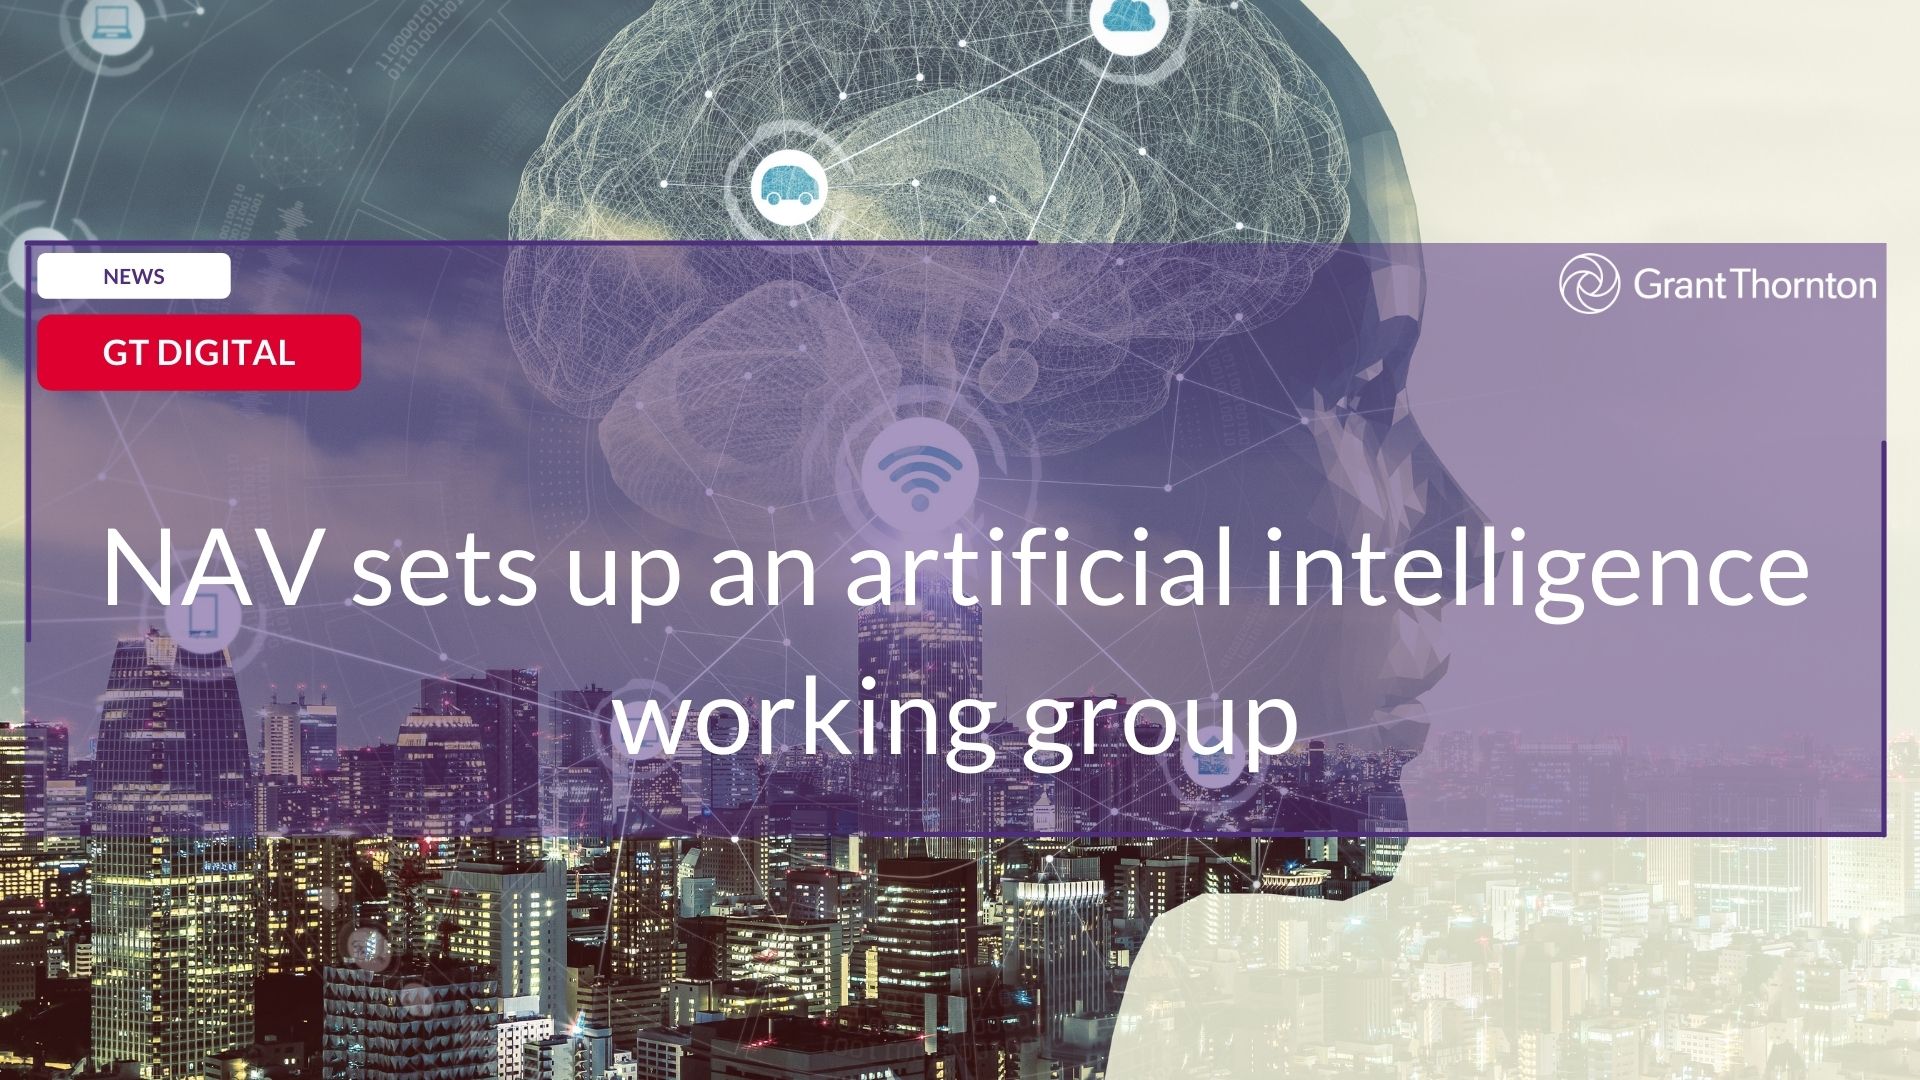 NAV sets up an artificial intelligence working group